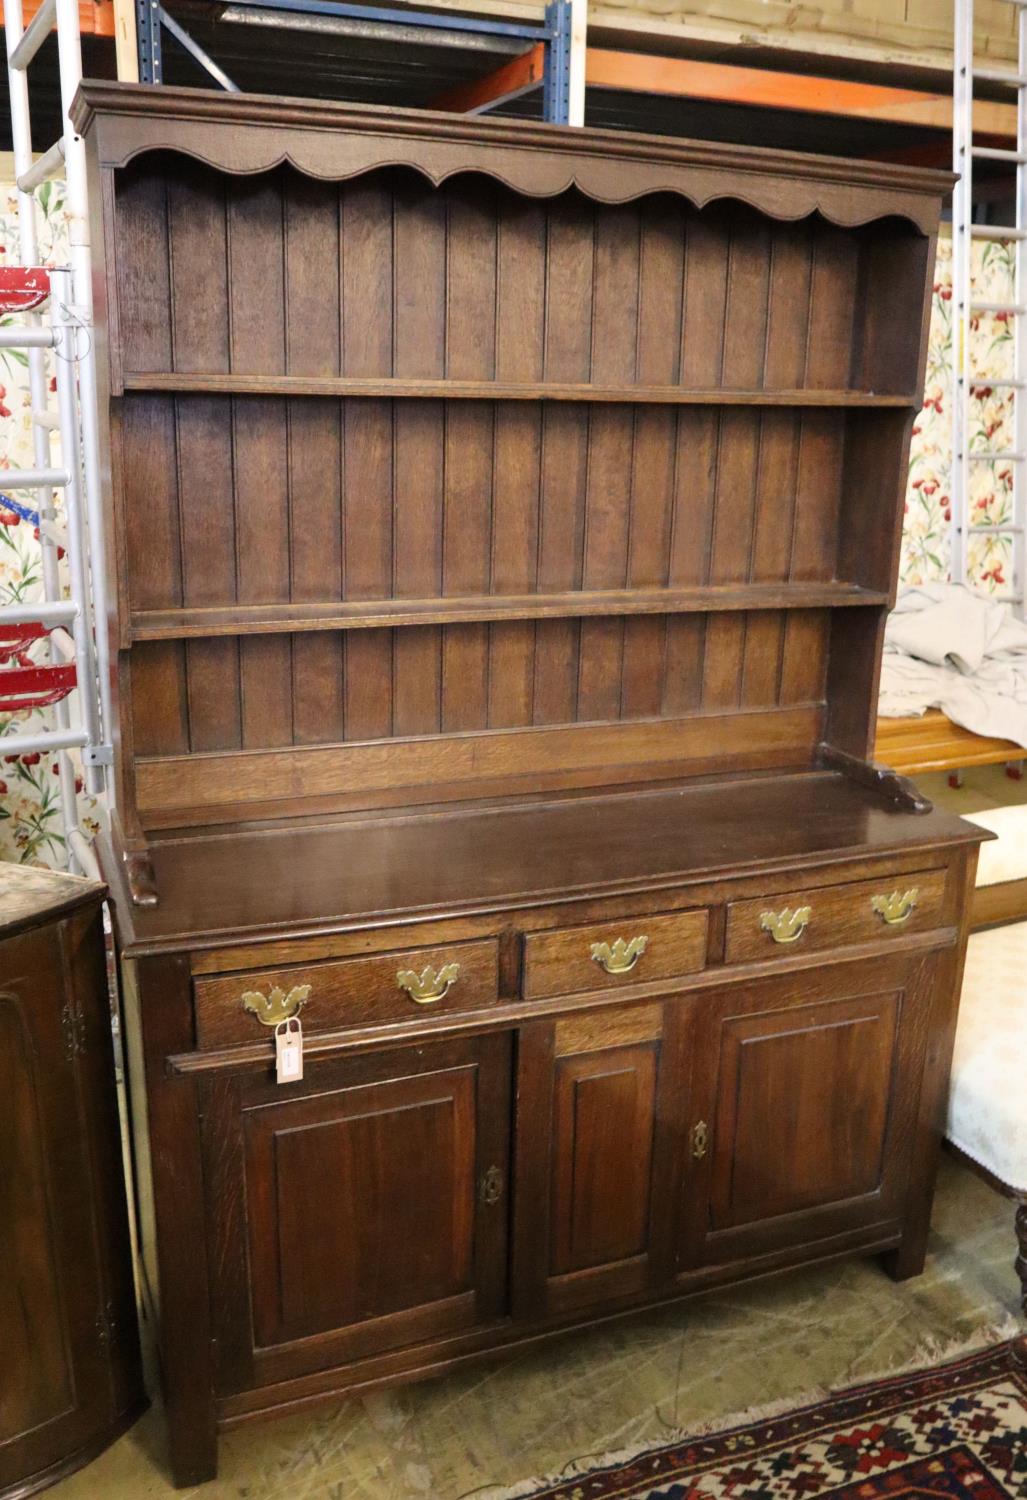 A George III style oak dresser, width 138cm, depth 45cm, height 190cm